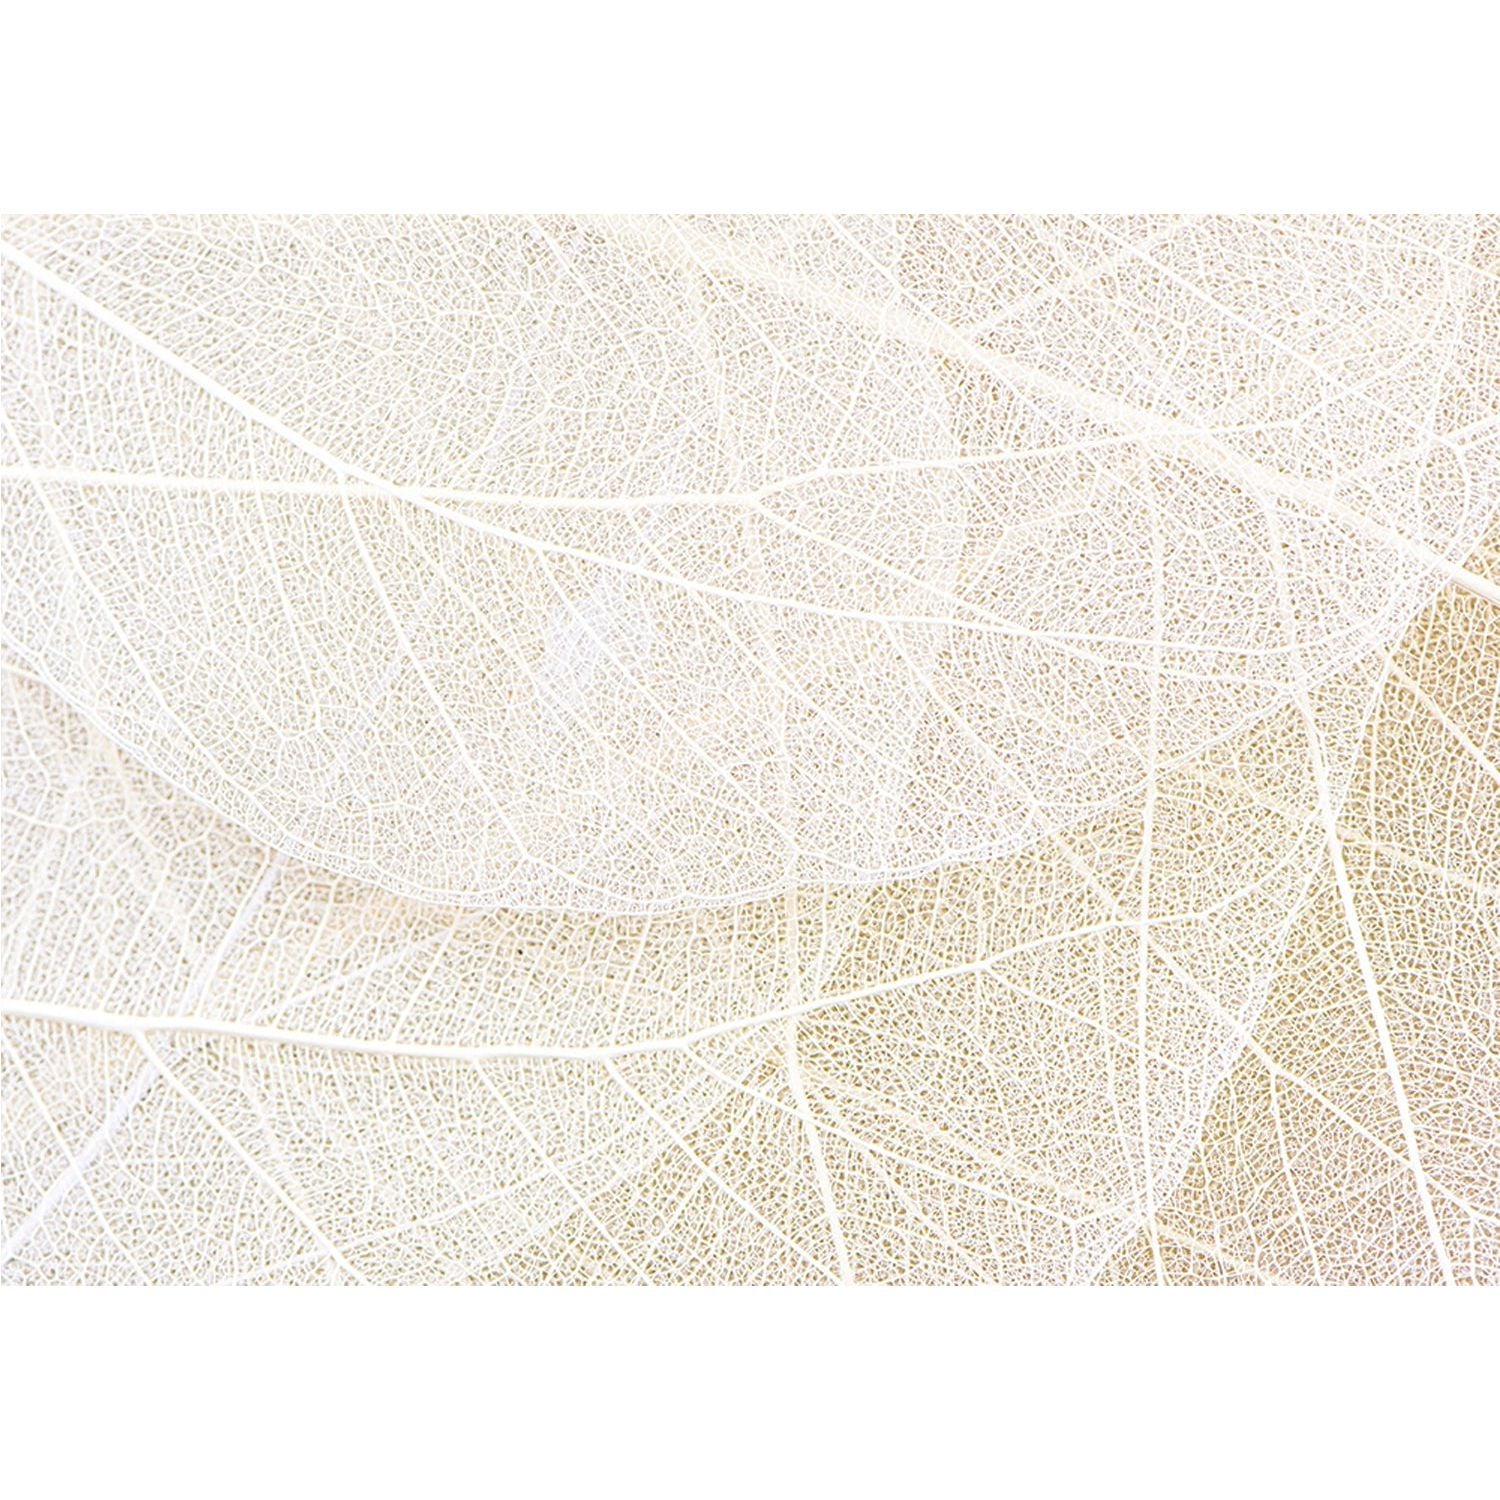 Cream Leaf Strings Wall Mural: Nature's Elegance